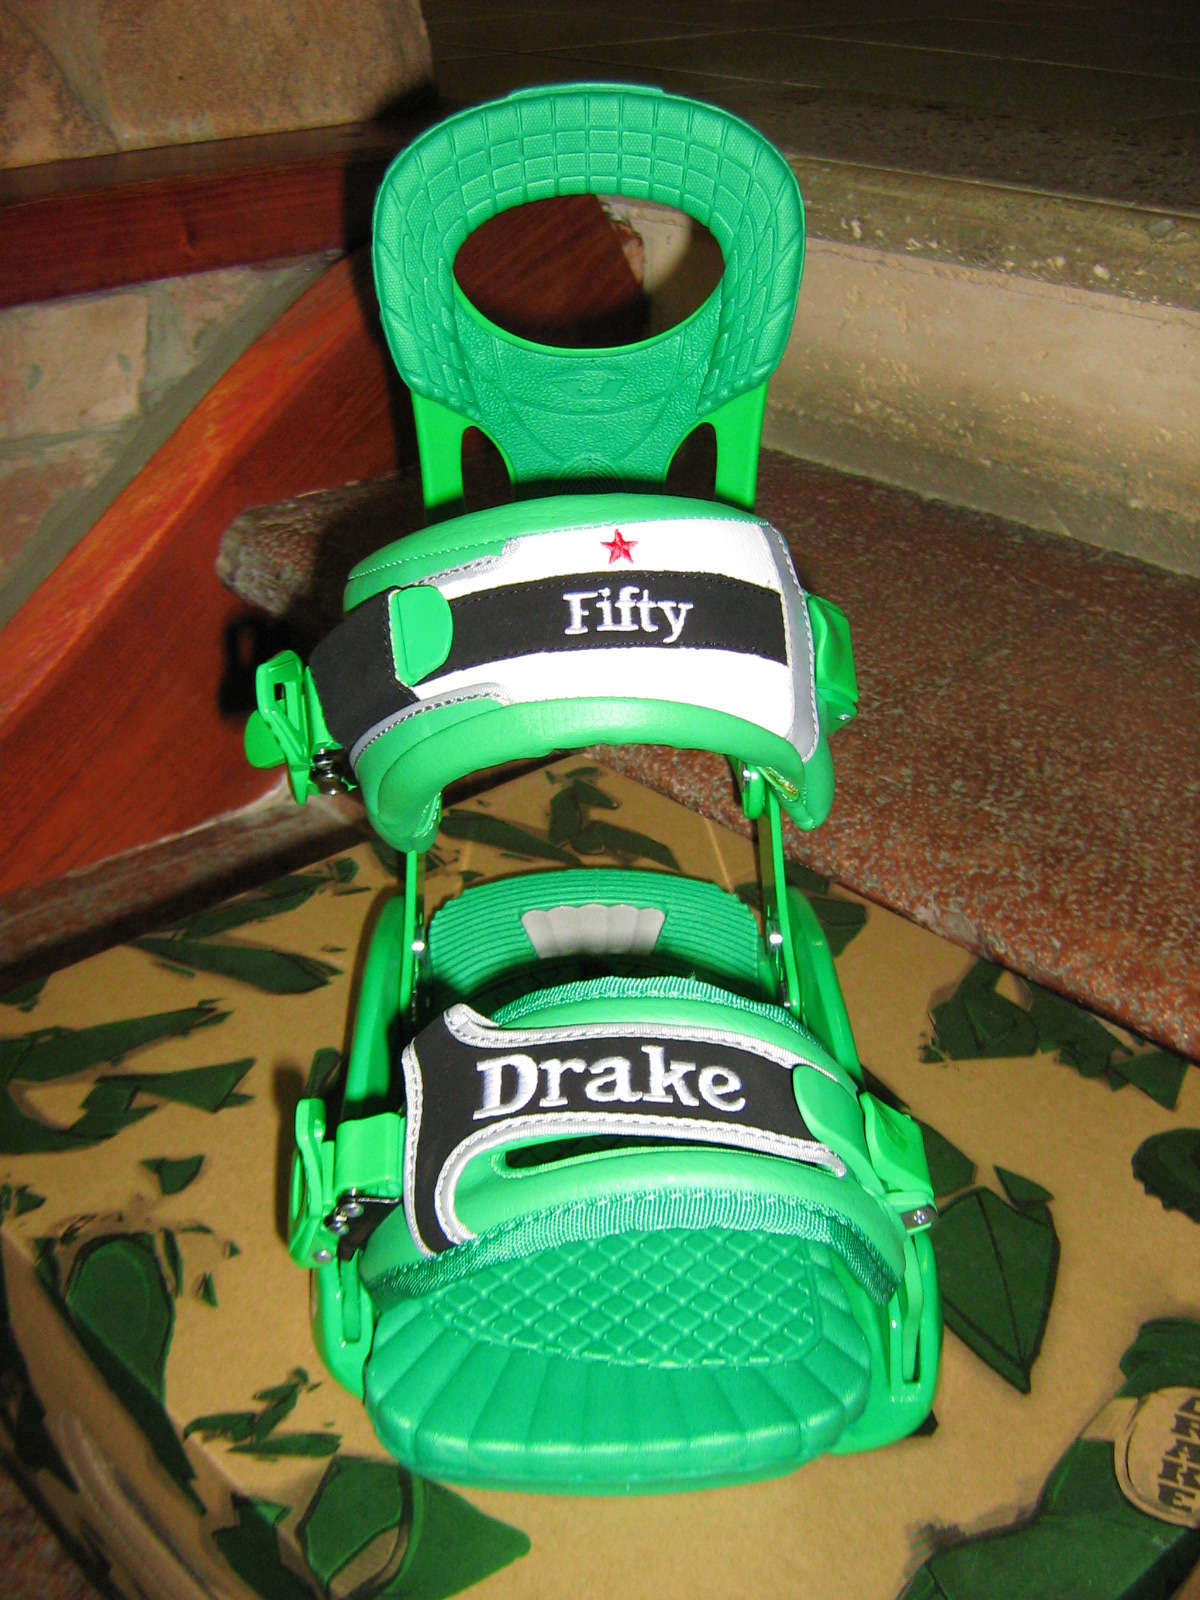 Drake Fifty (green)